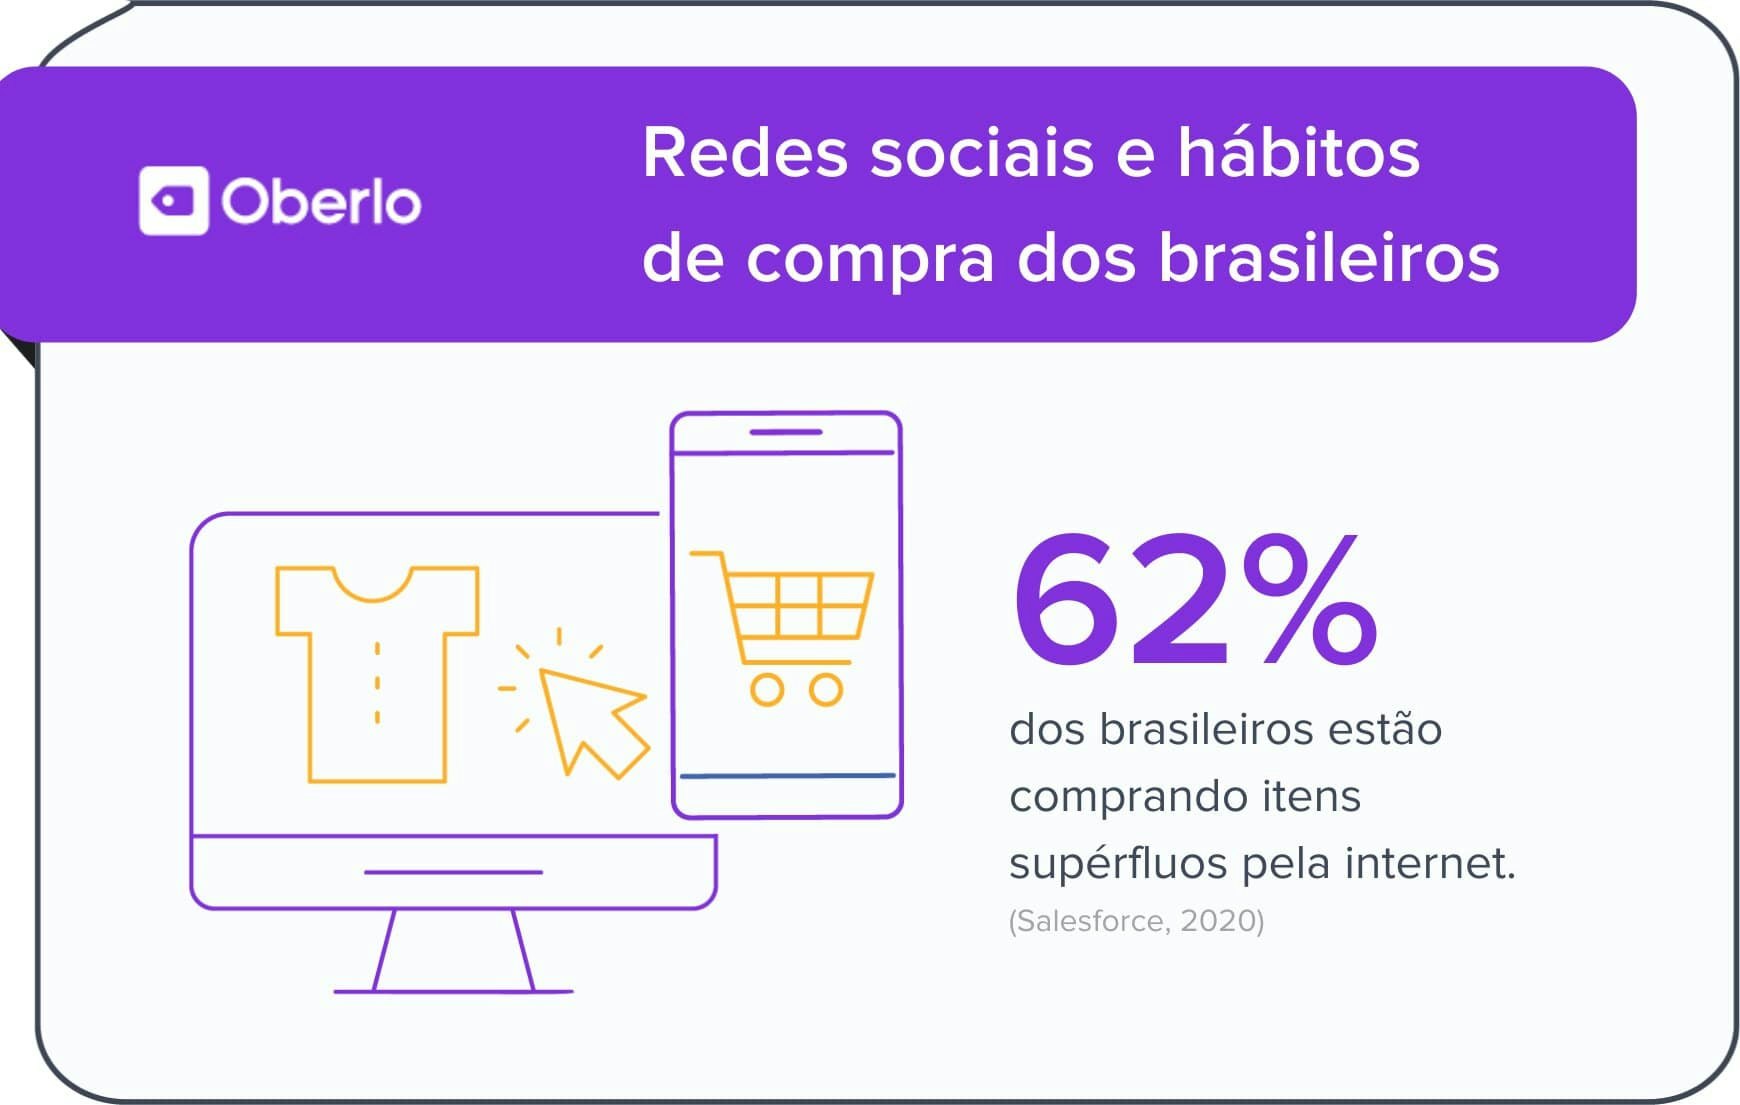 Redes sociais e hábitos de compra dos brasileiros